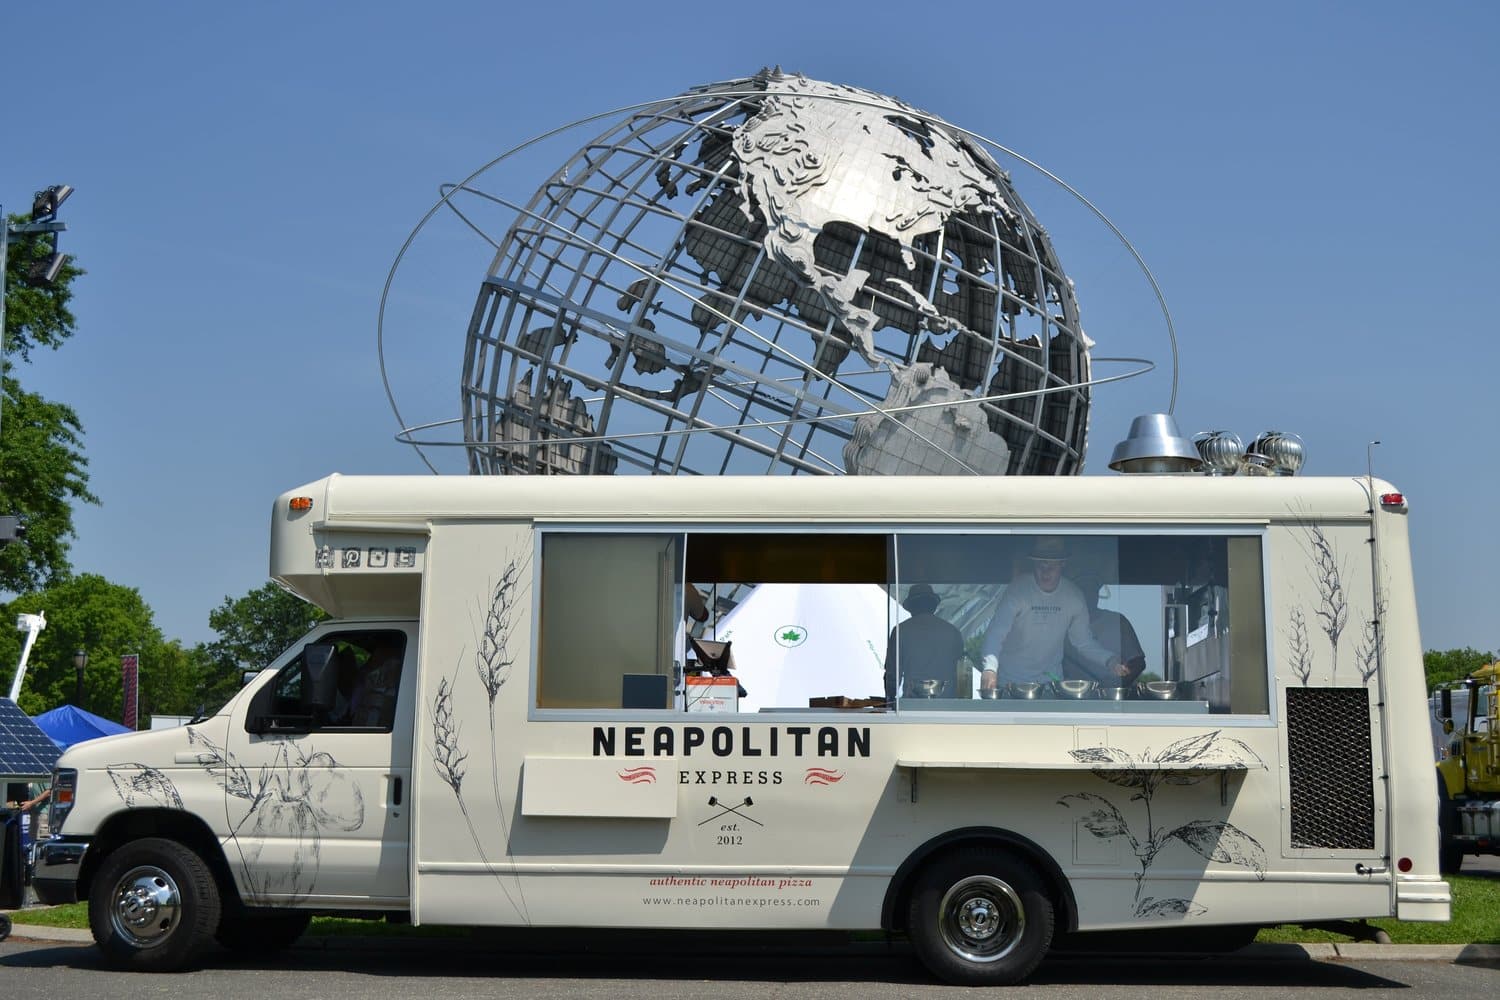 Neopolitan express food truck